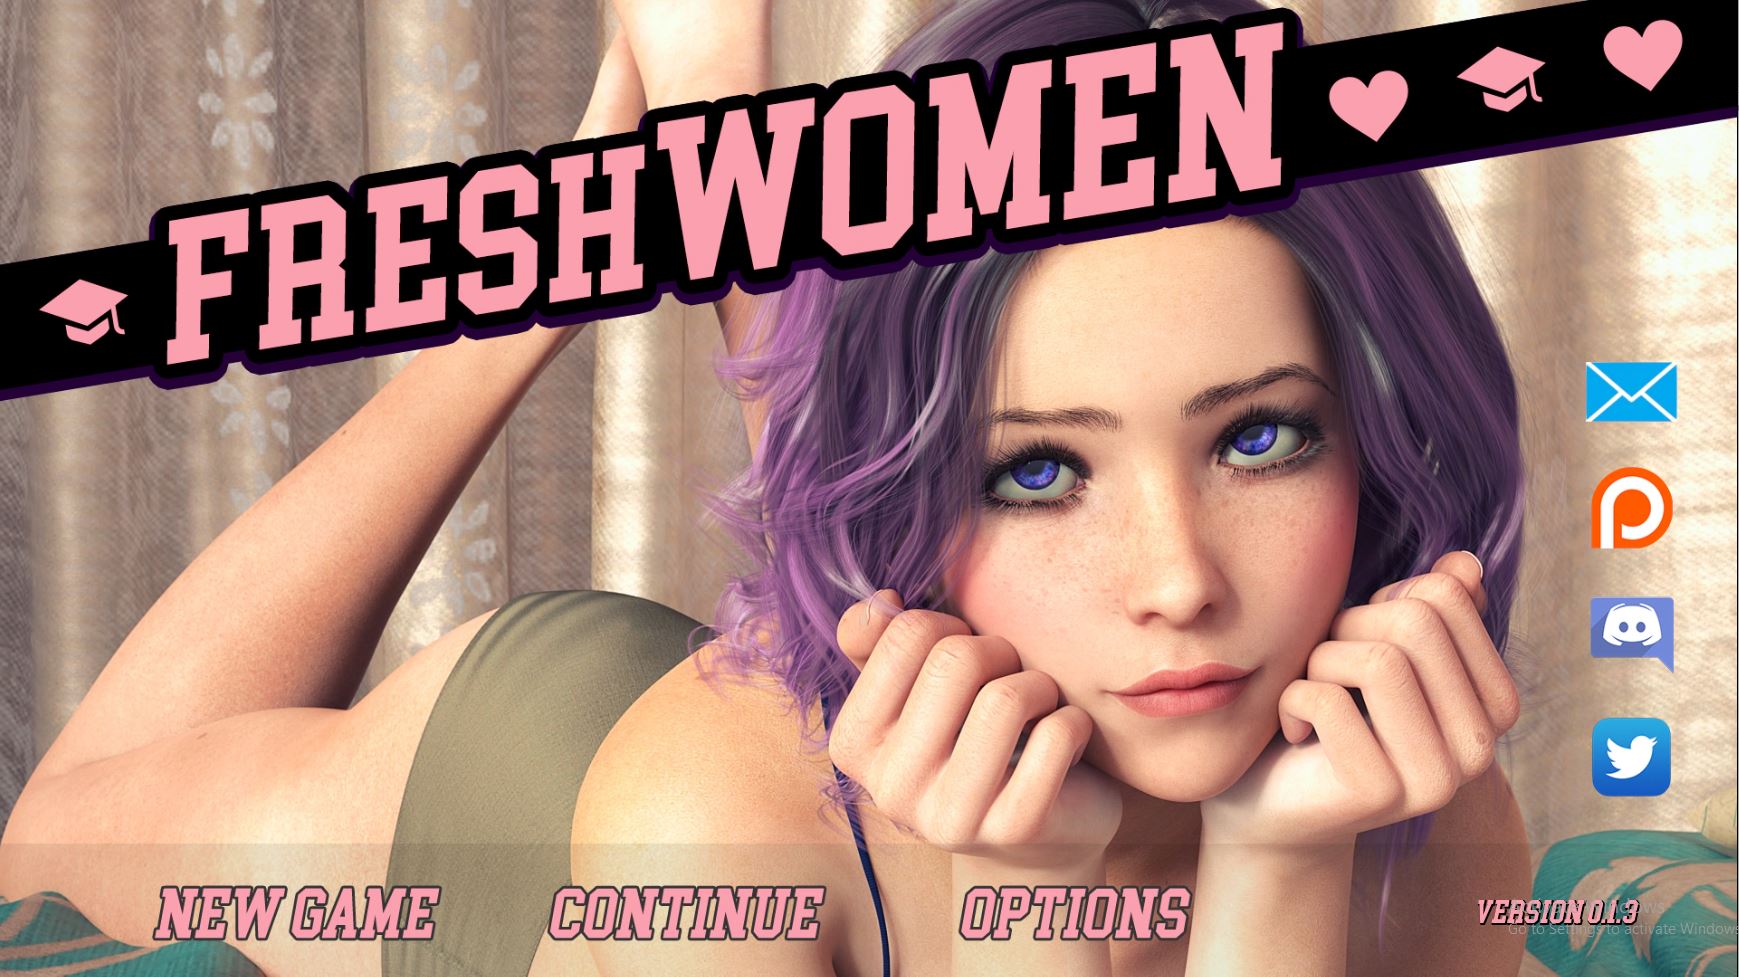 Fresh women adult game